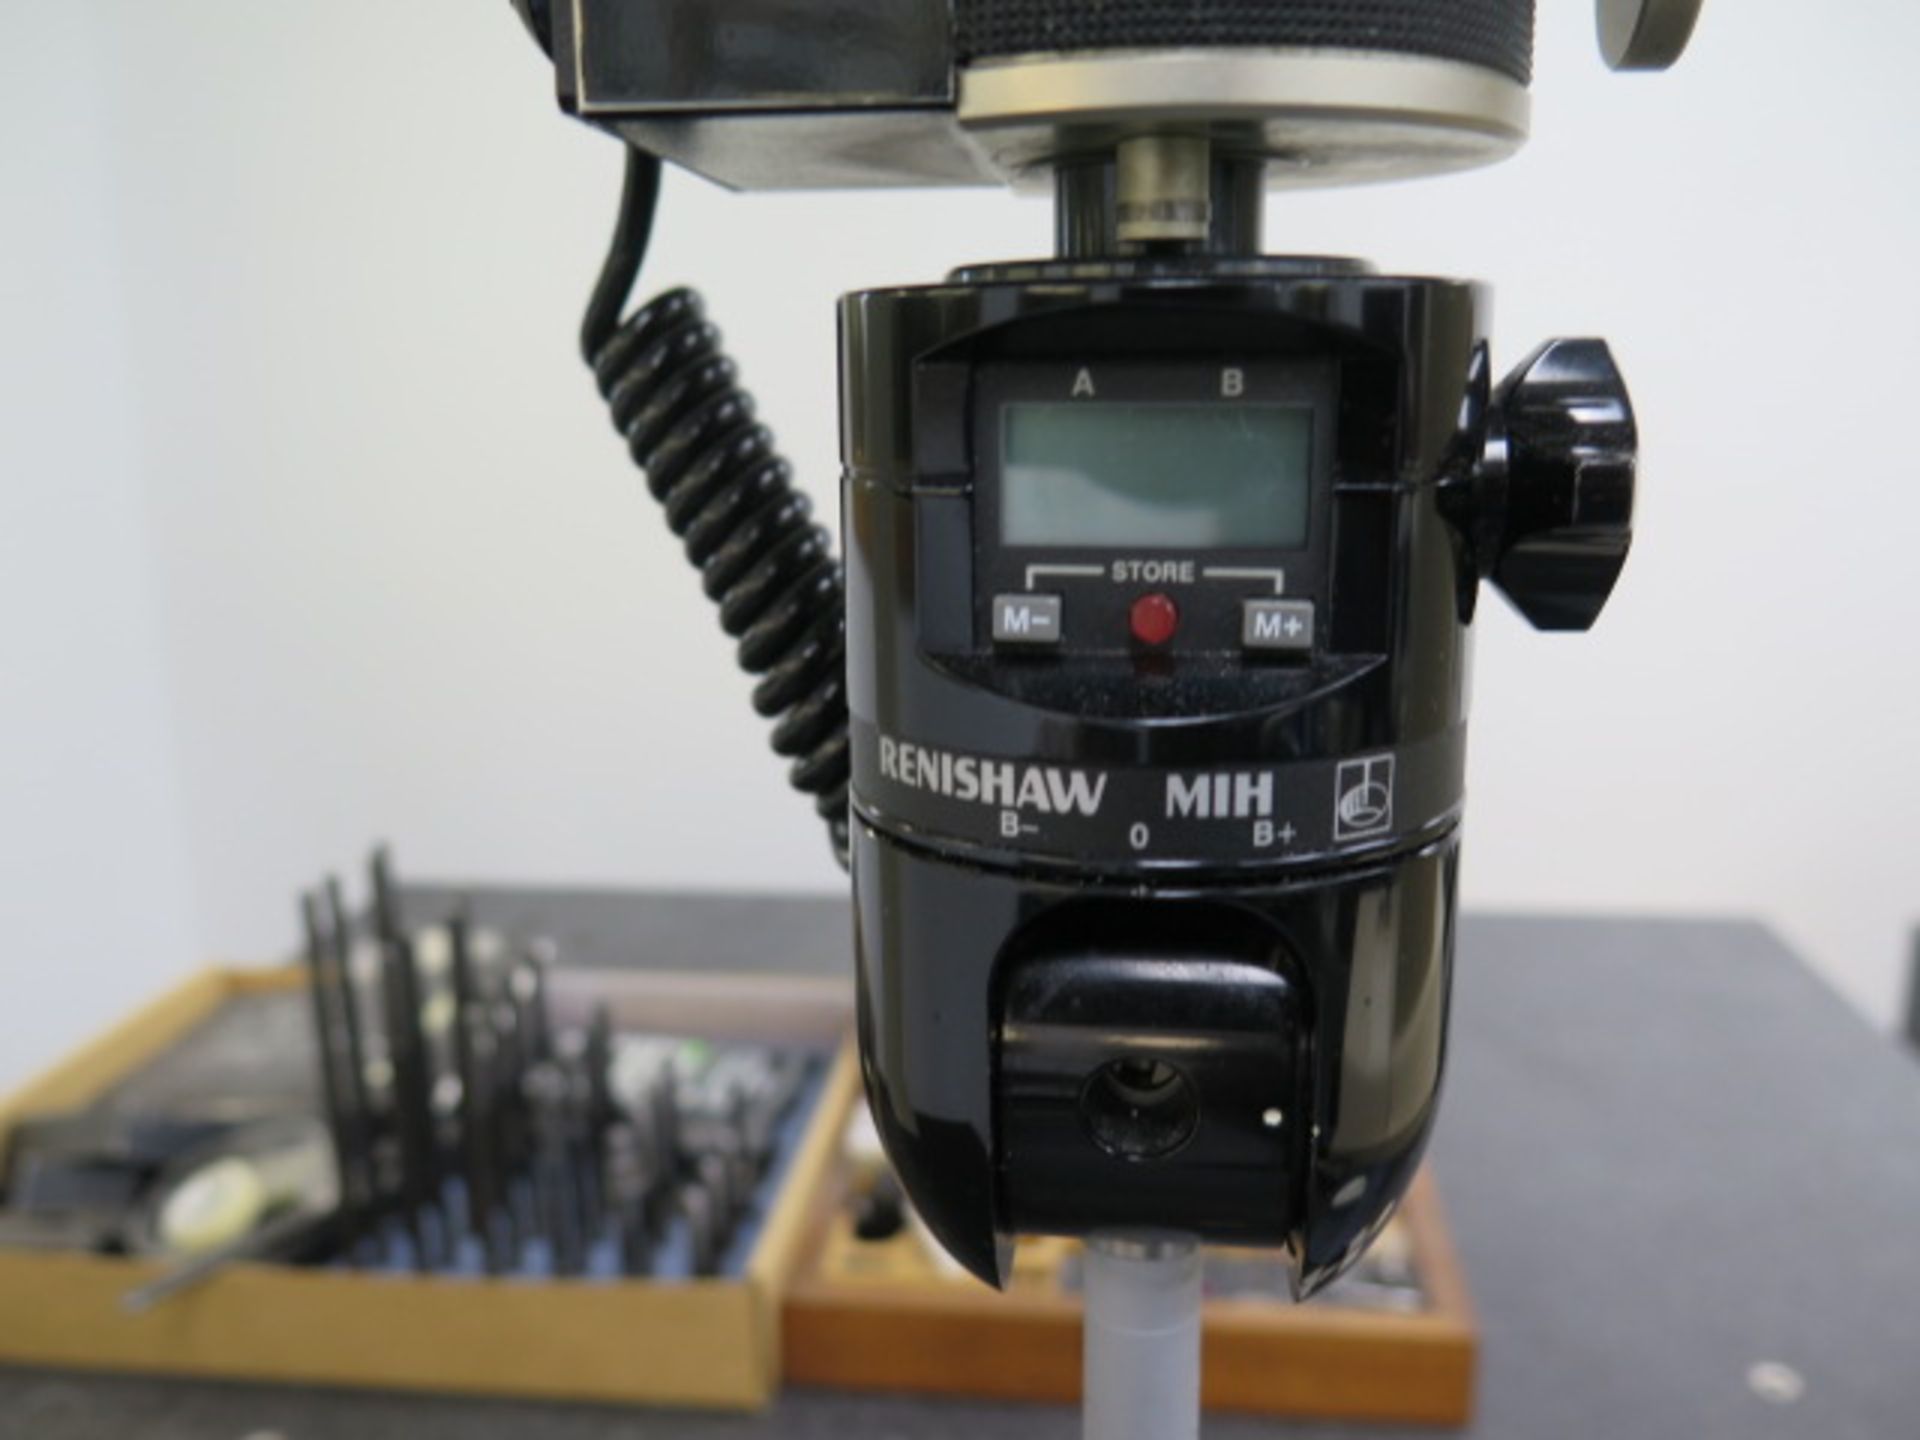 Mitutoyo B706 CMM Machine s/n A9102618-011102001 w/ Renishaw MIH Digital Probe Head, SOLD AS IS - Image 7 of 17